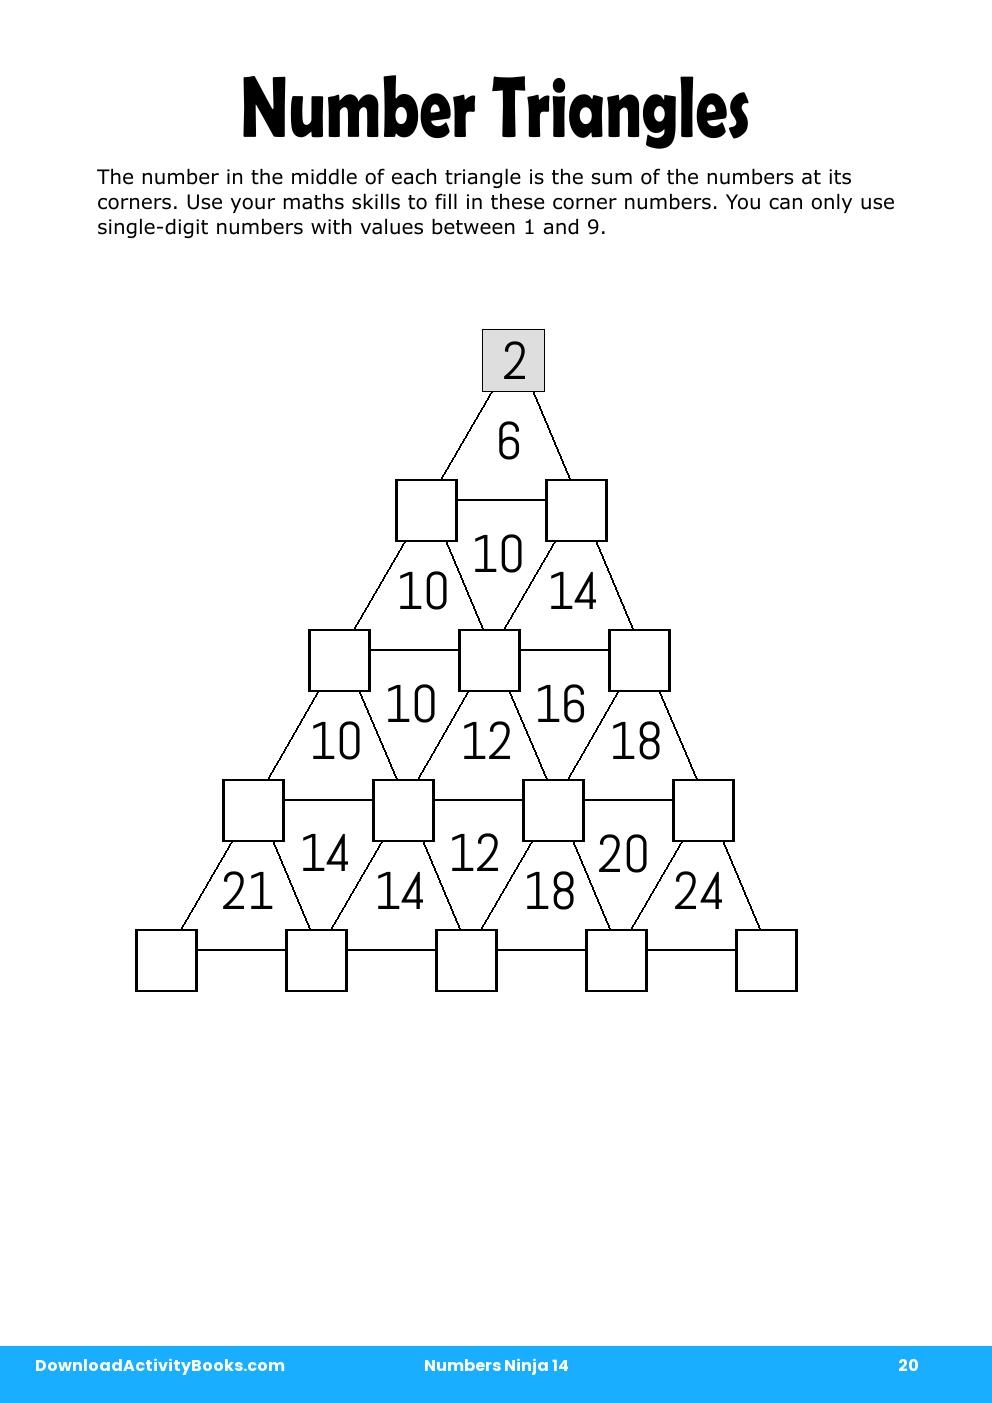 Number Triangles in Numbers Ninja 14